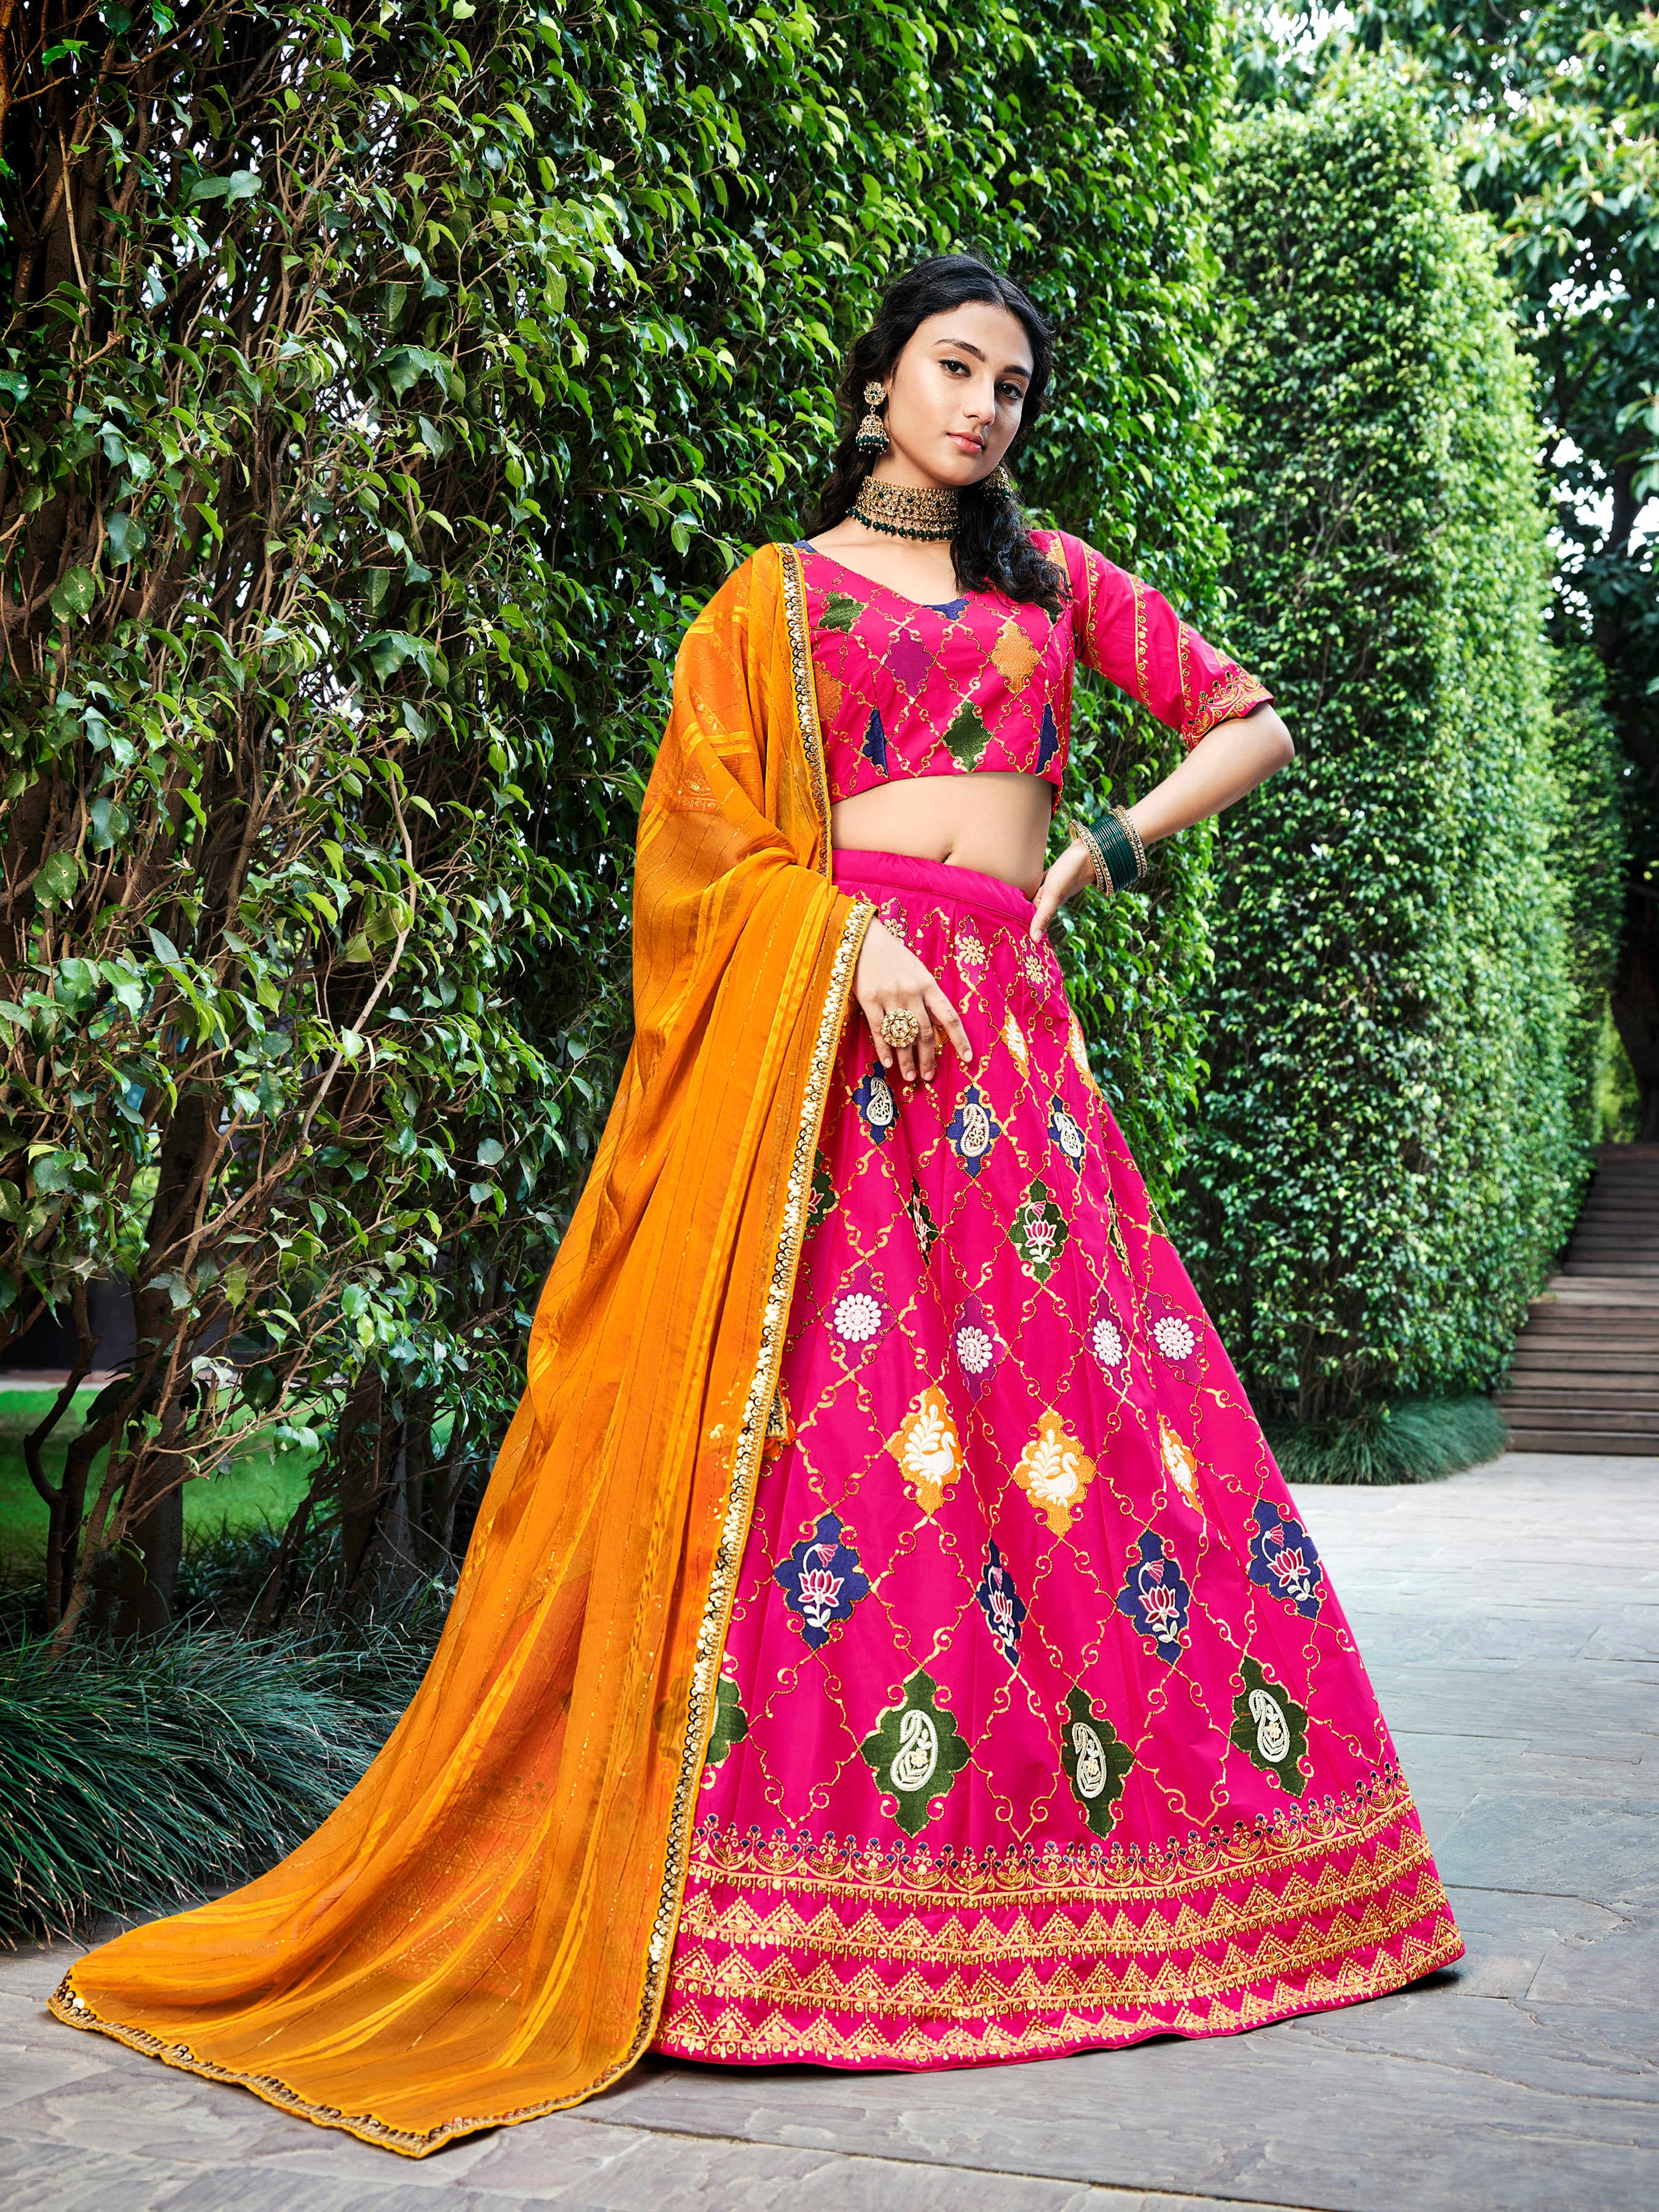 Banarasi Silk Pink & Yellow Lehenga Designer Choli at Rs 3860 in Mumbai